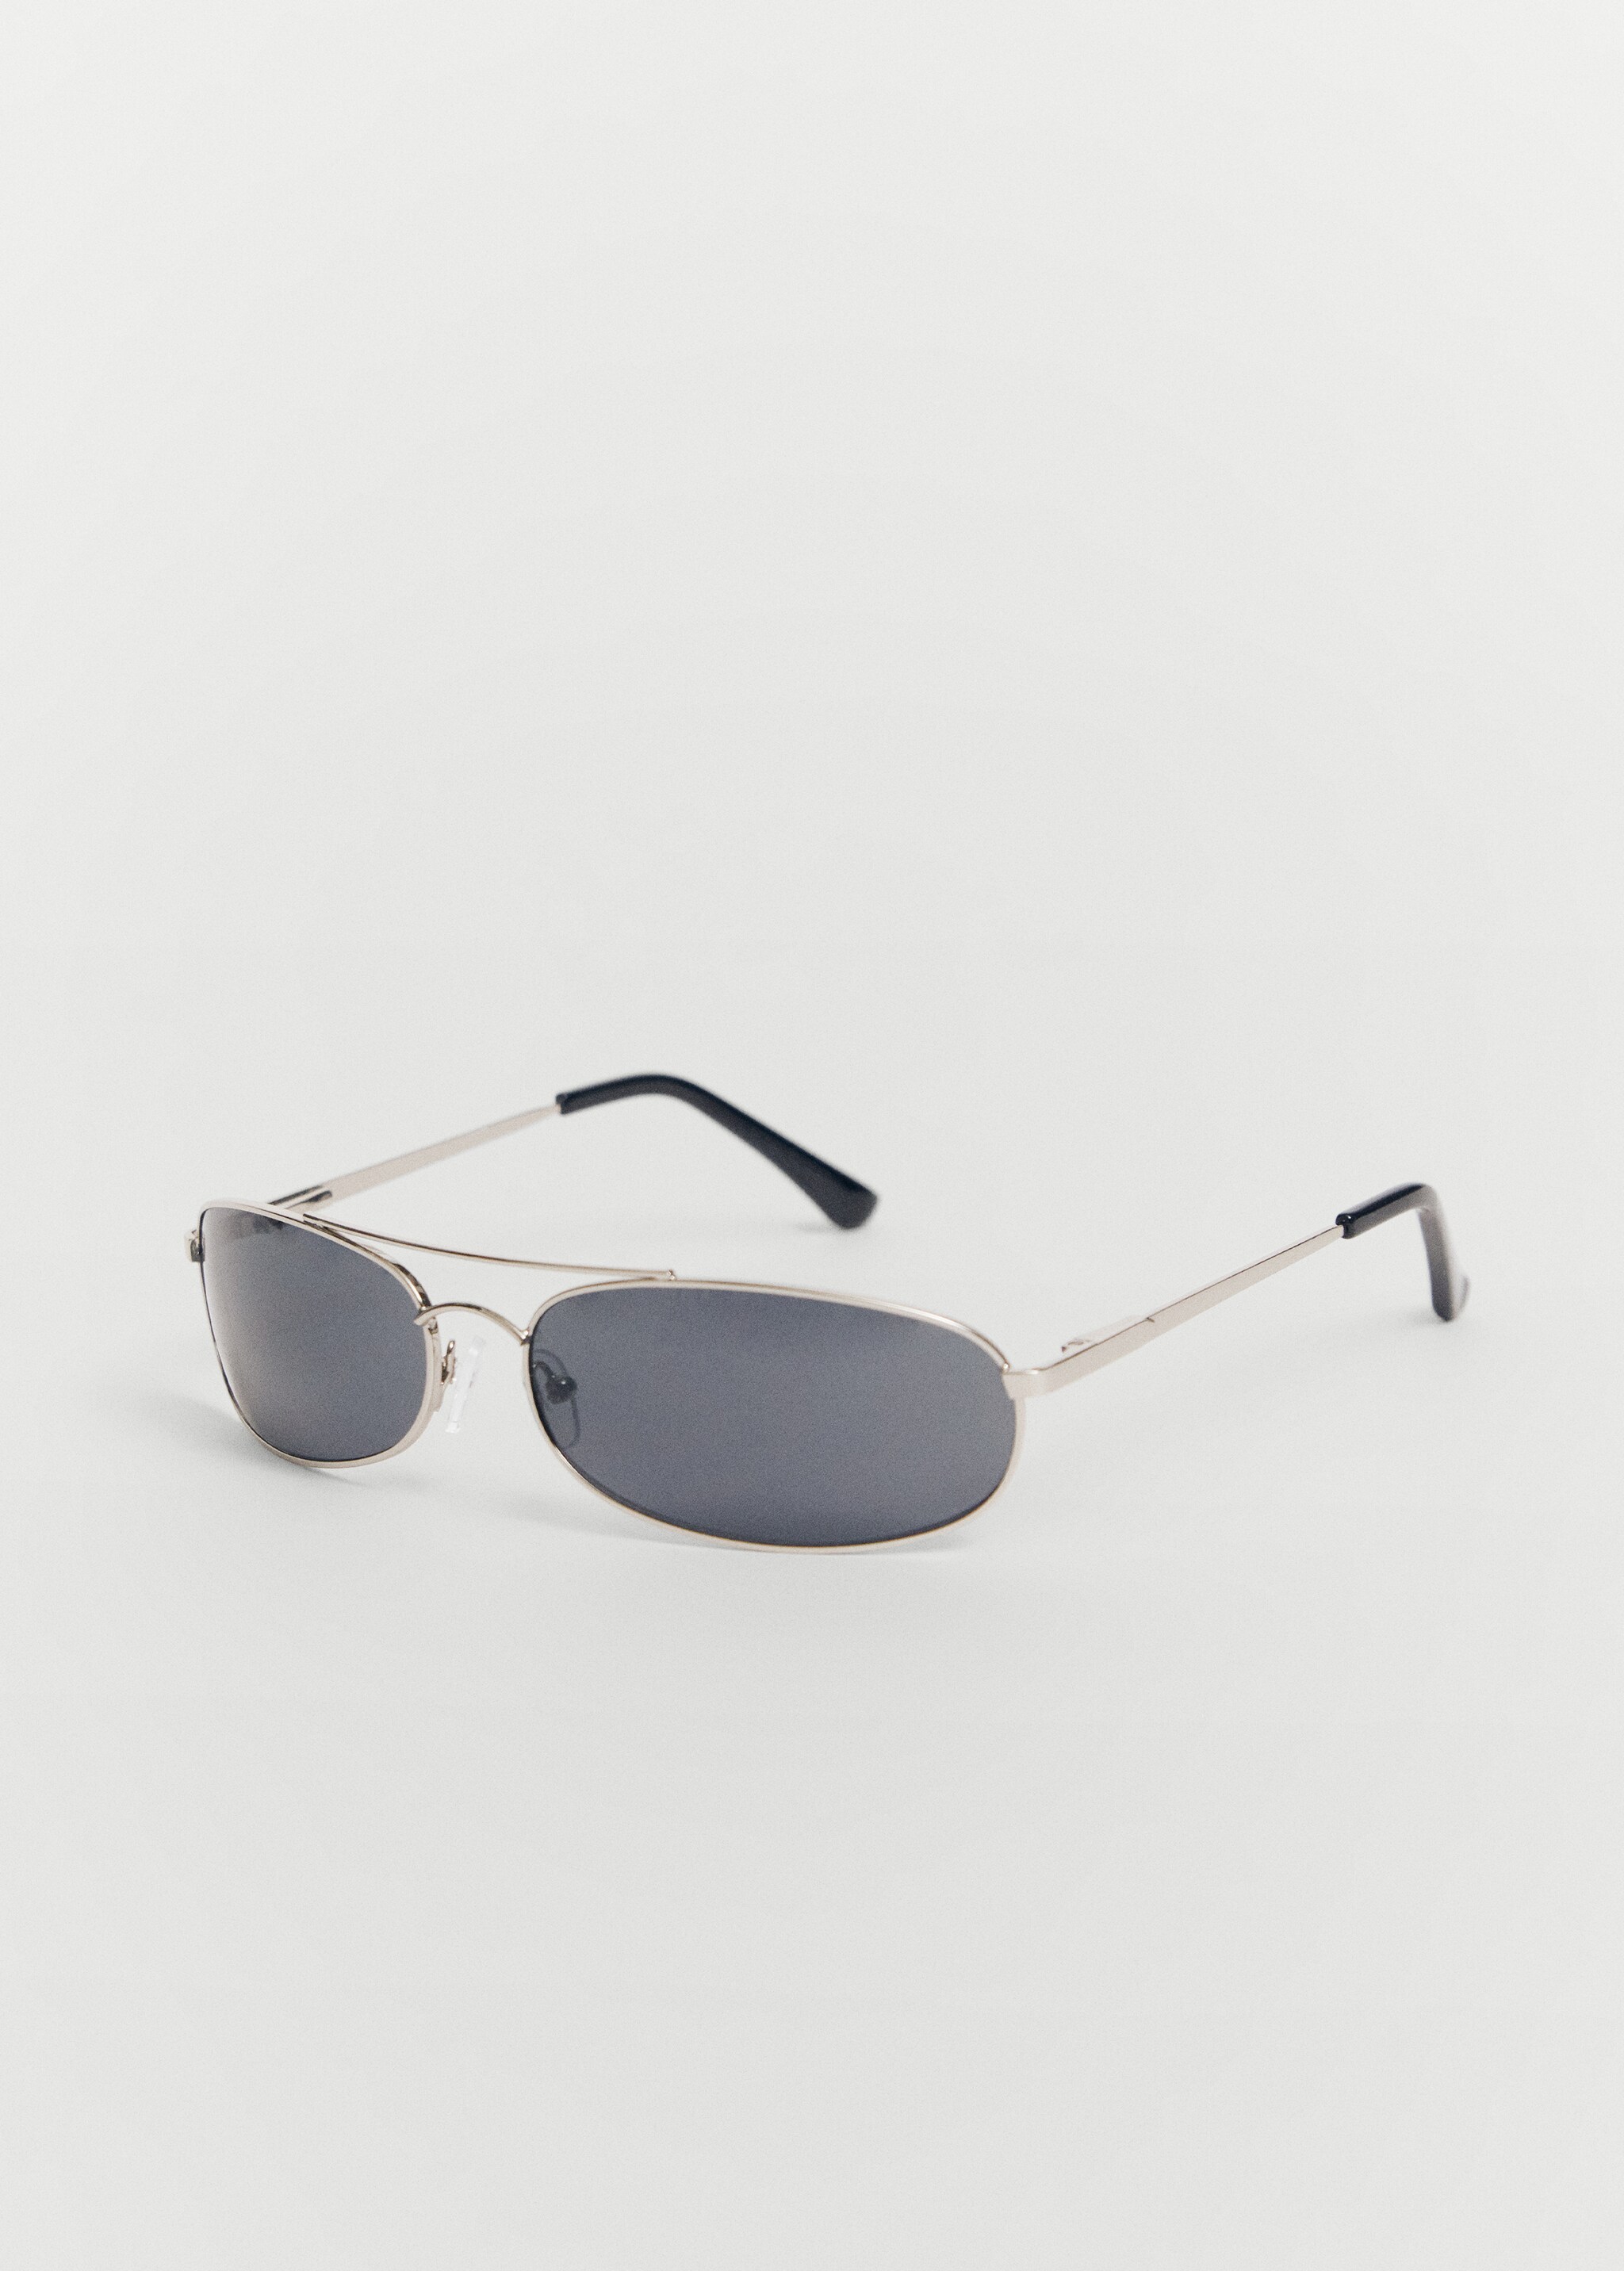 Metallic frame sunglasses - Medium plane